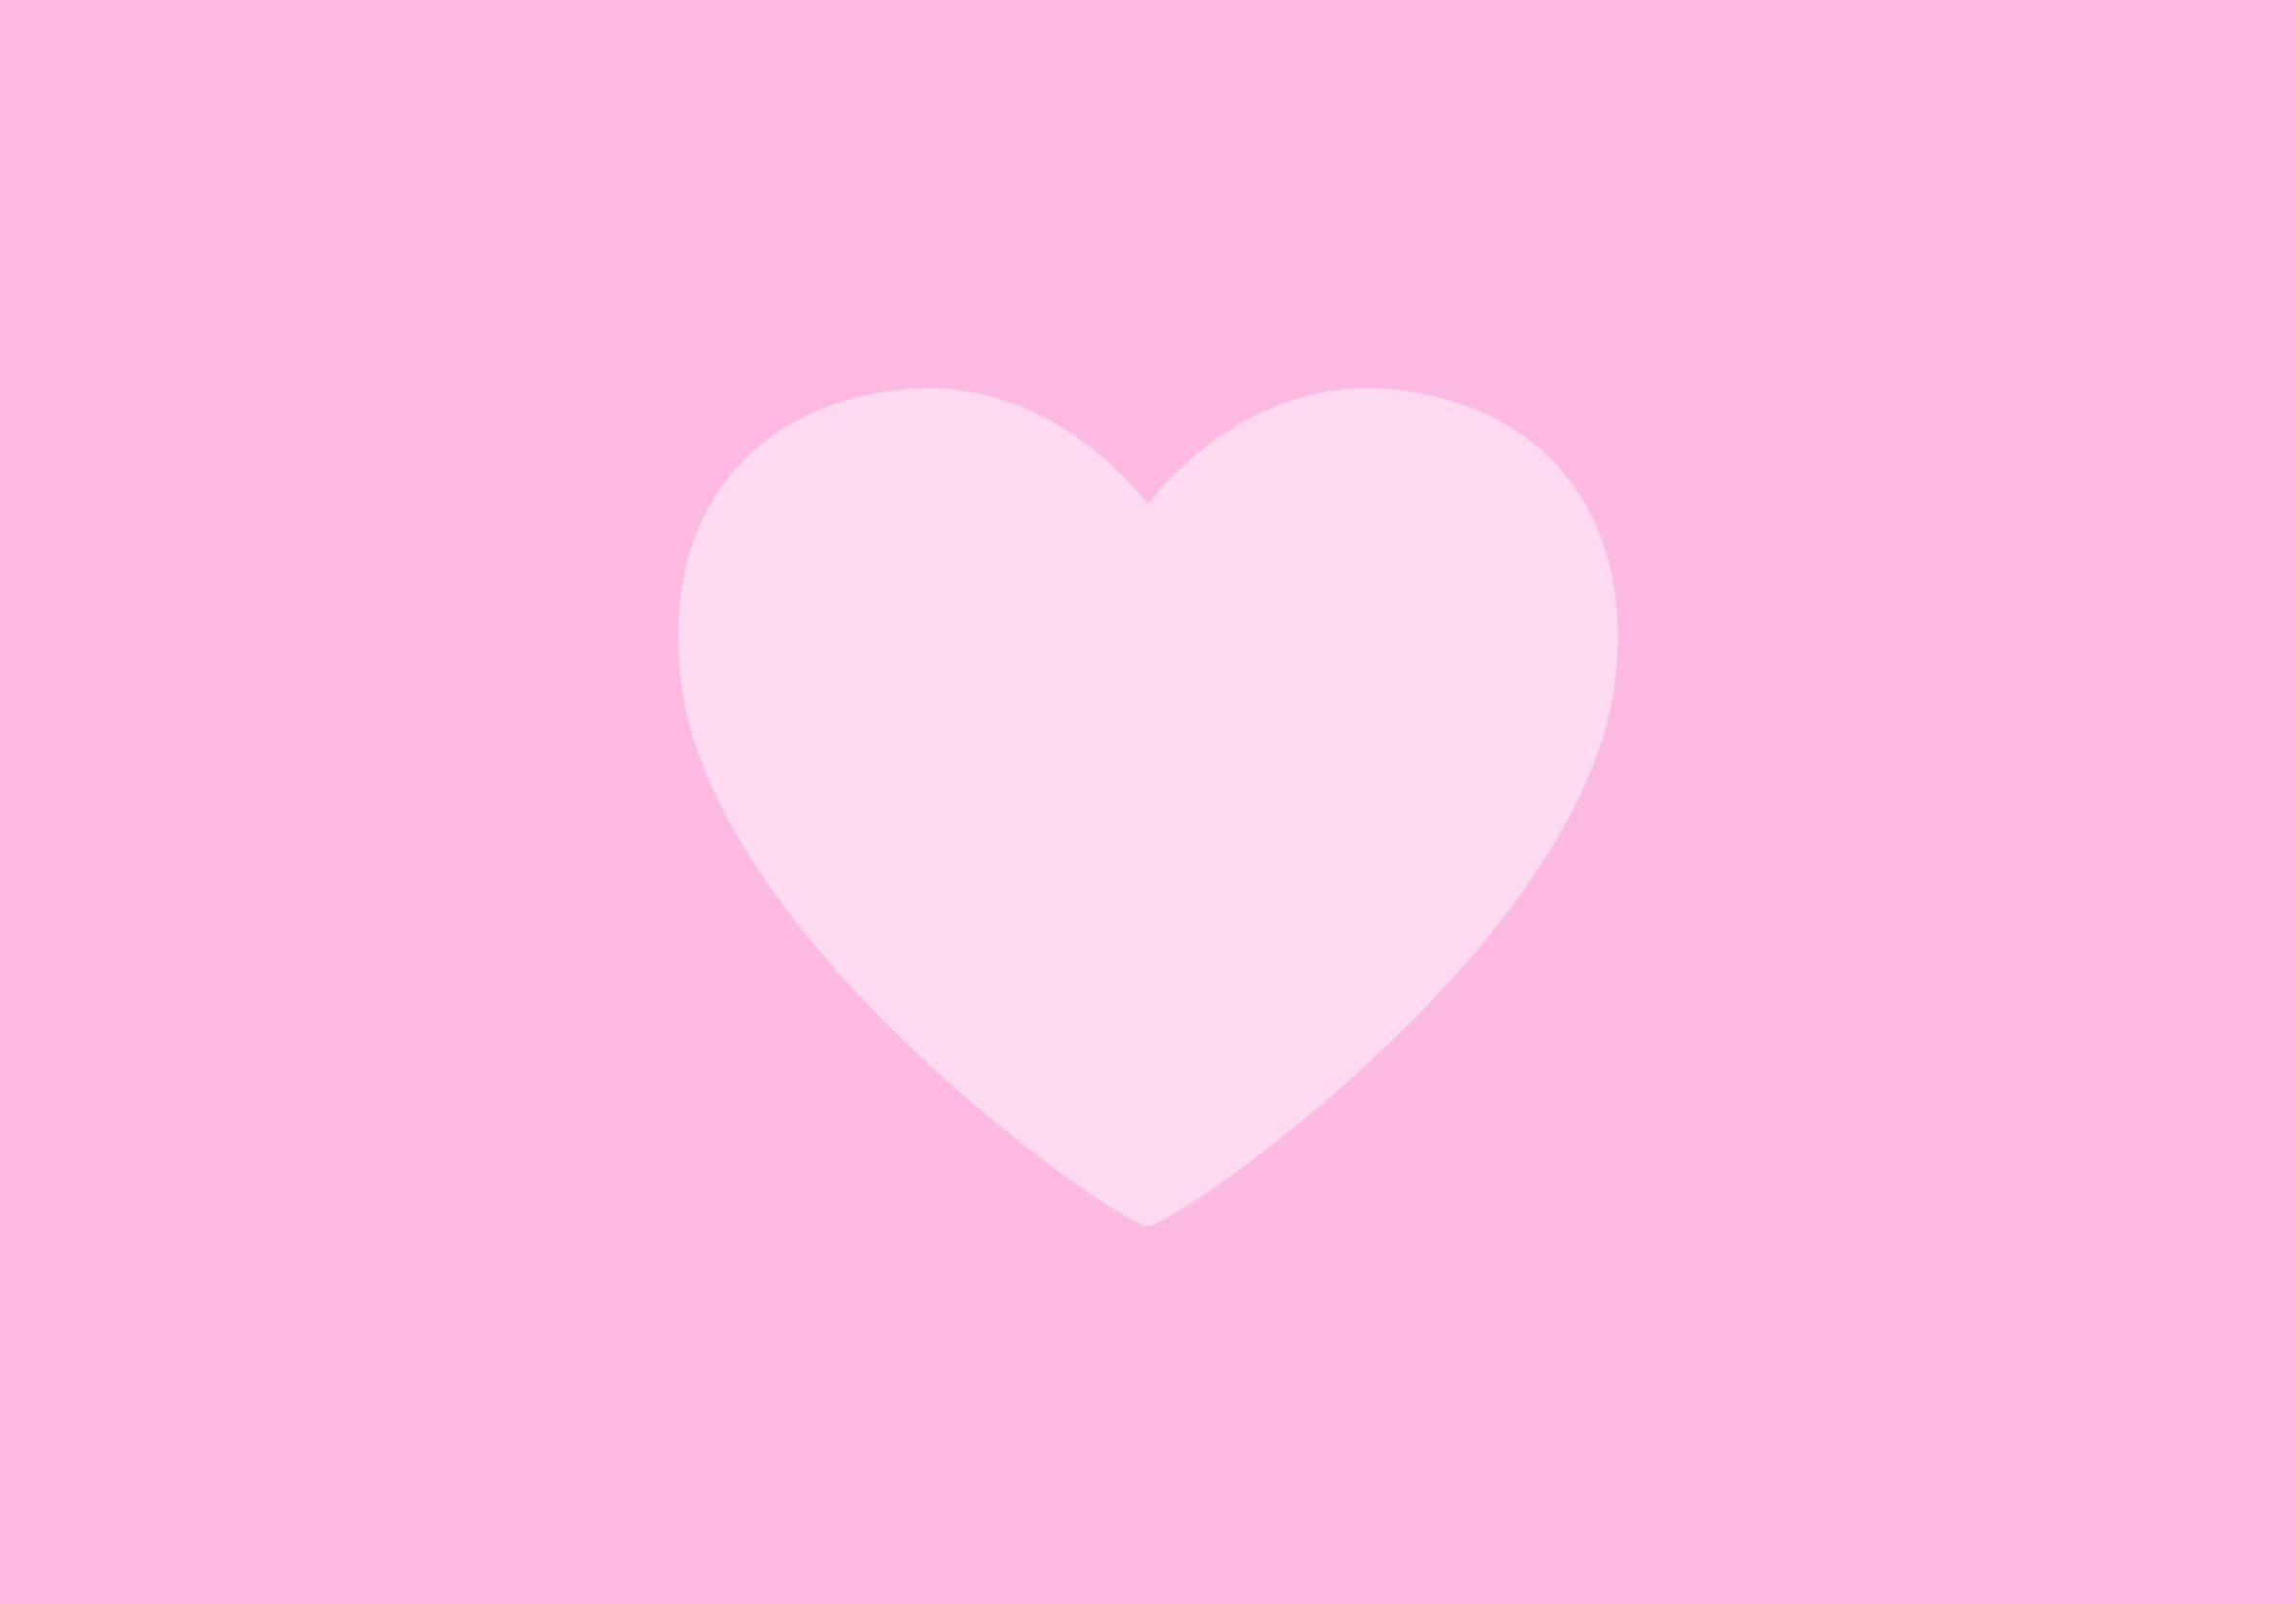 2388x1668 iPad Pro wallpapers Love Heart Pink Background iPad Wallpaper 2388x1668 pixels resolution